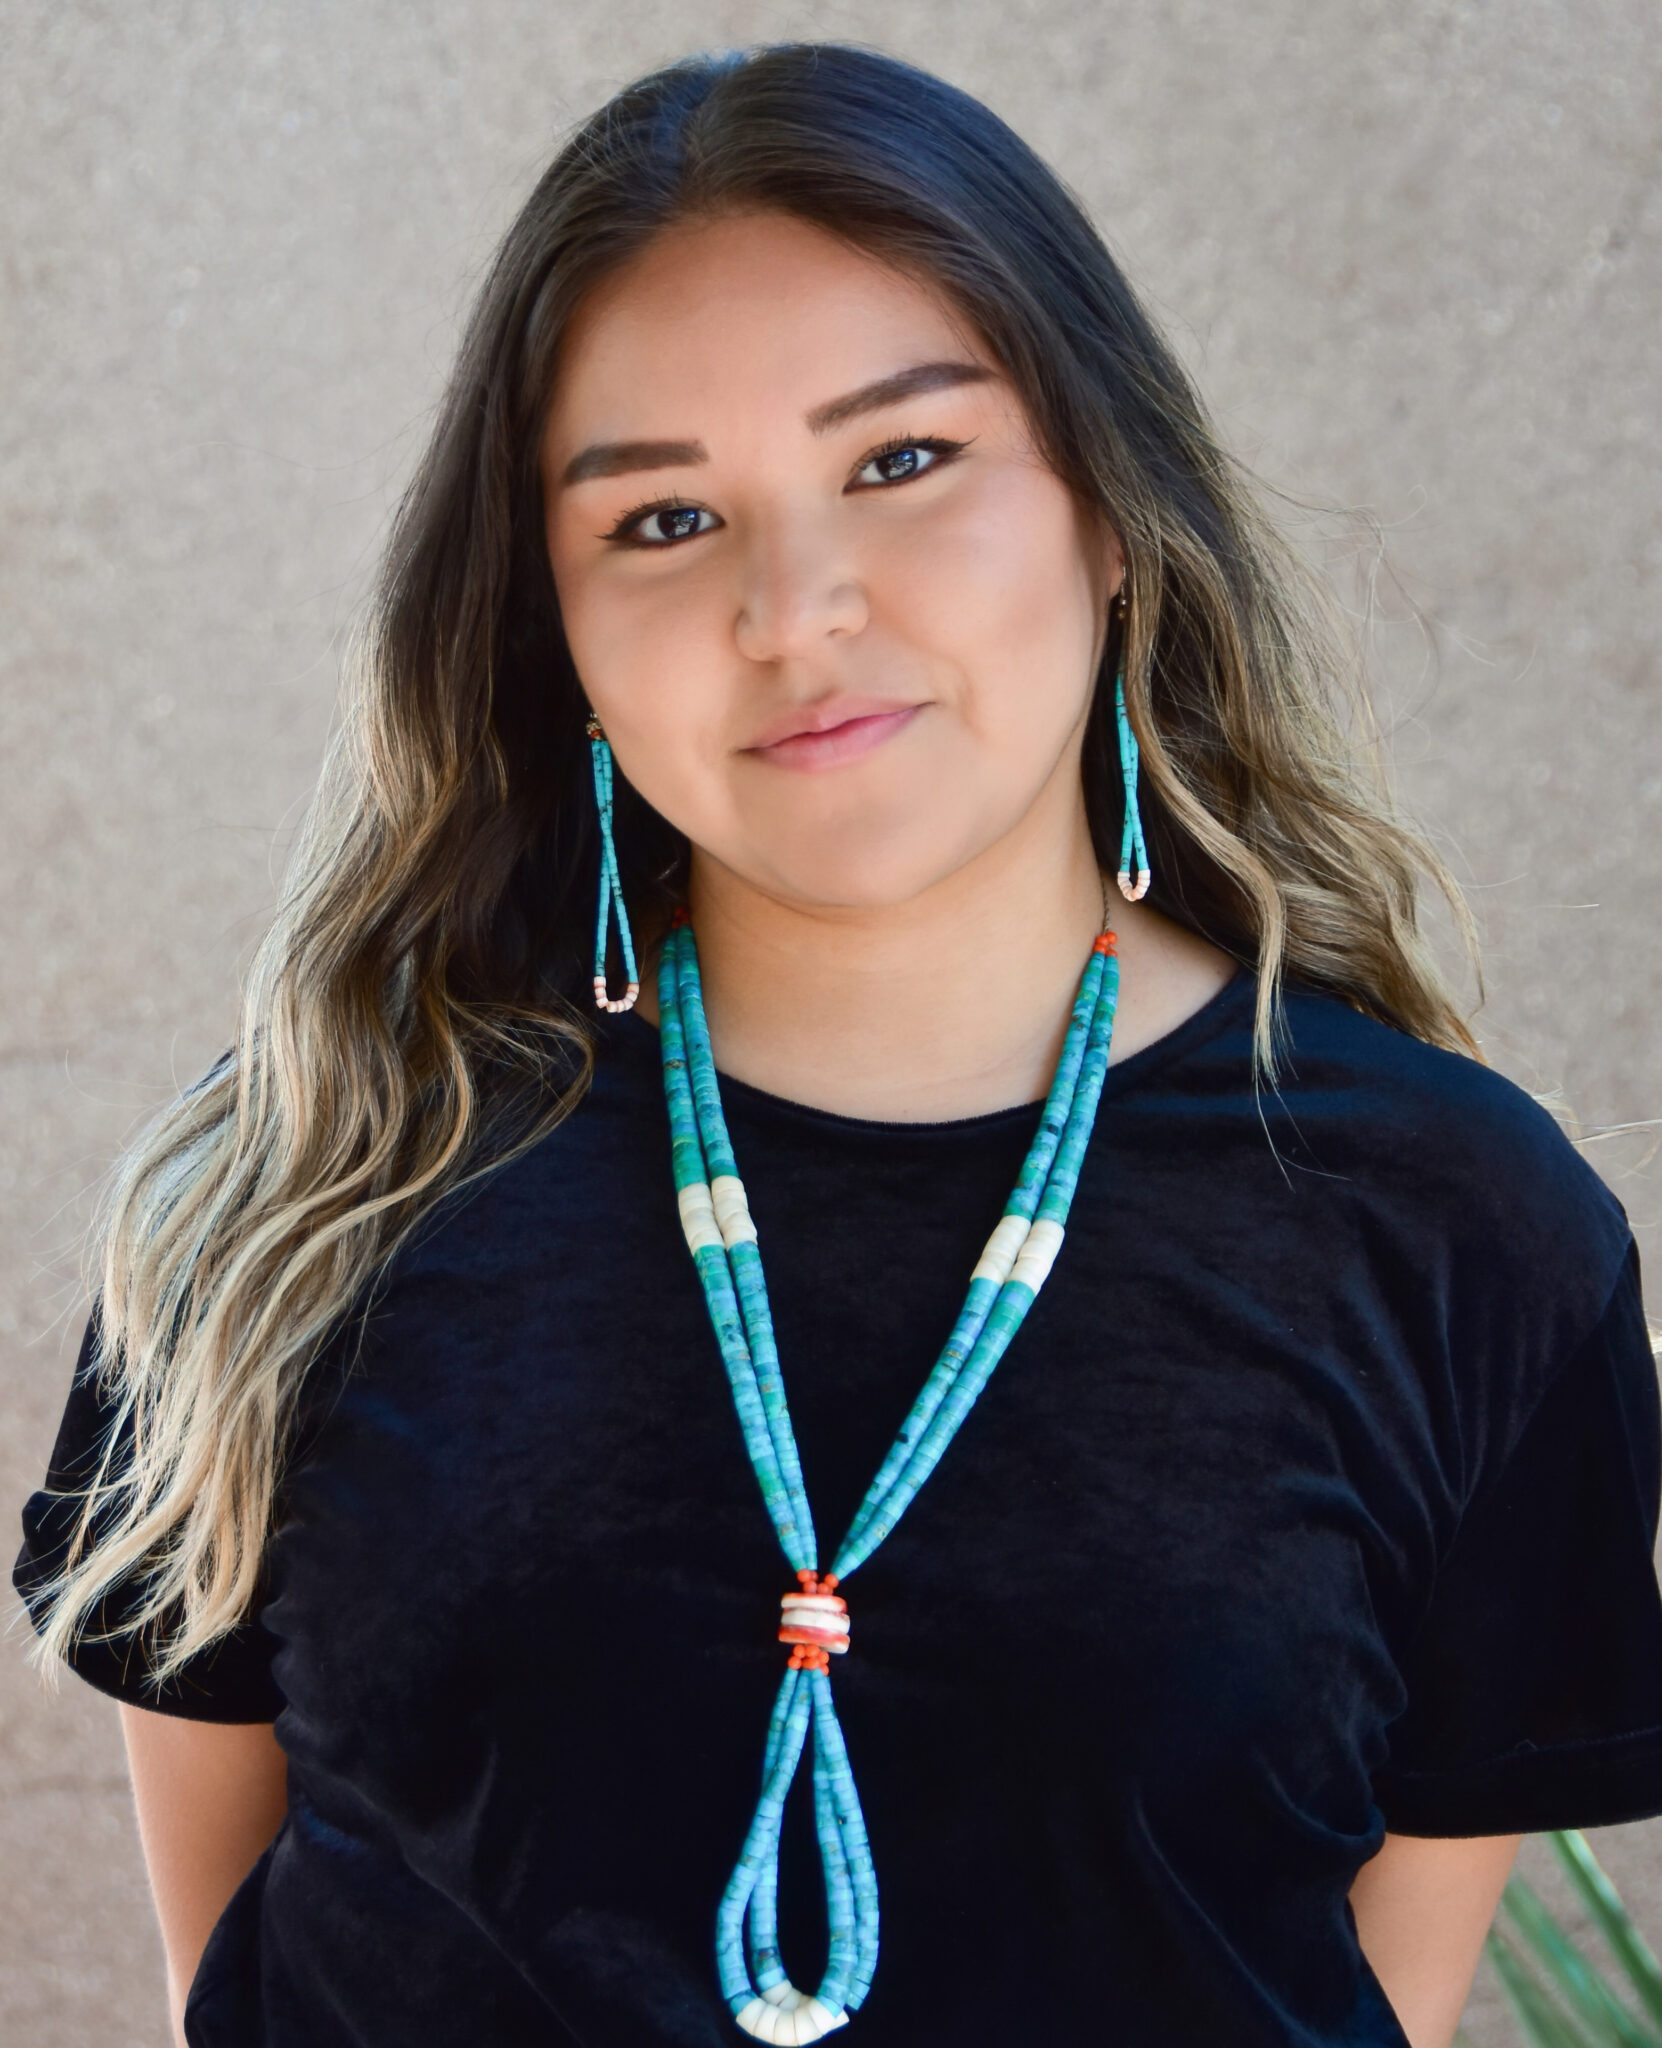 Native American Media Alliance – Sienna Camille